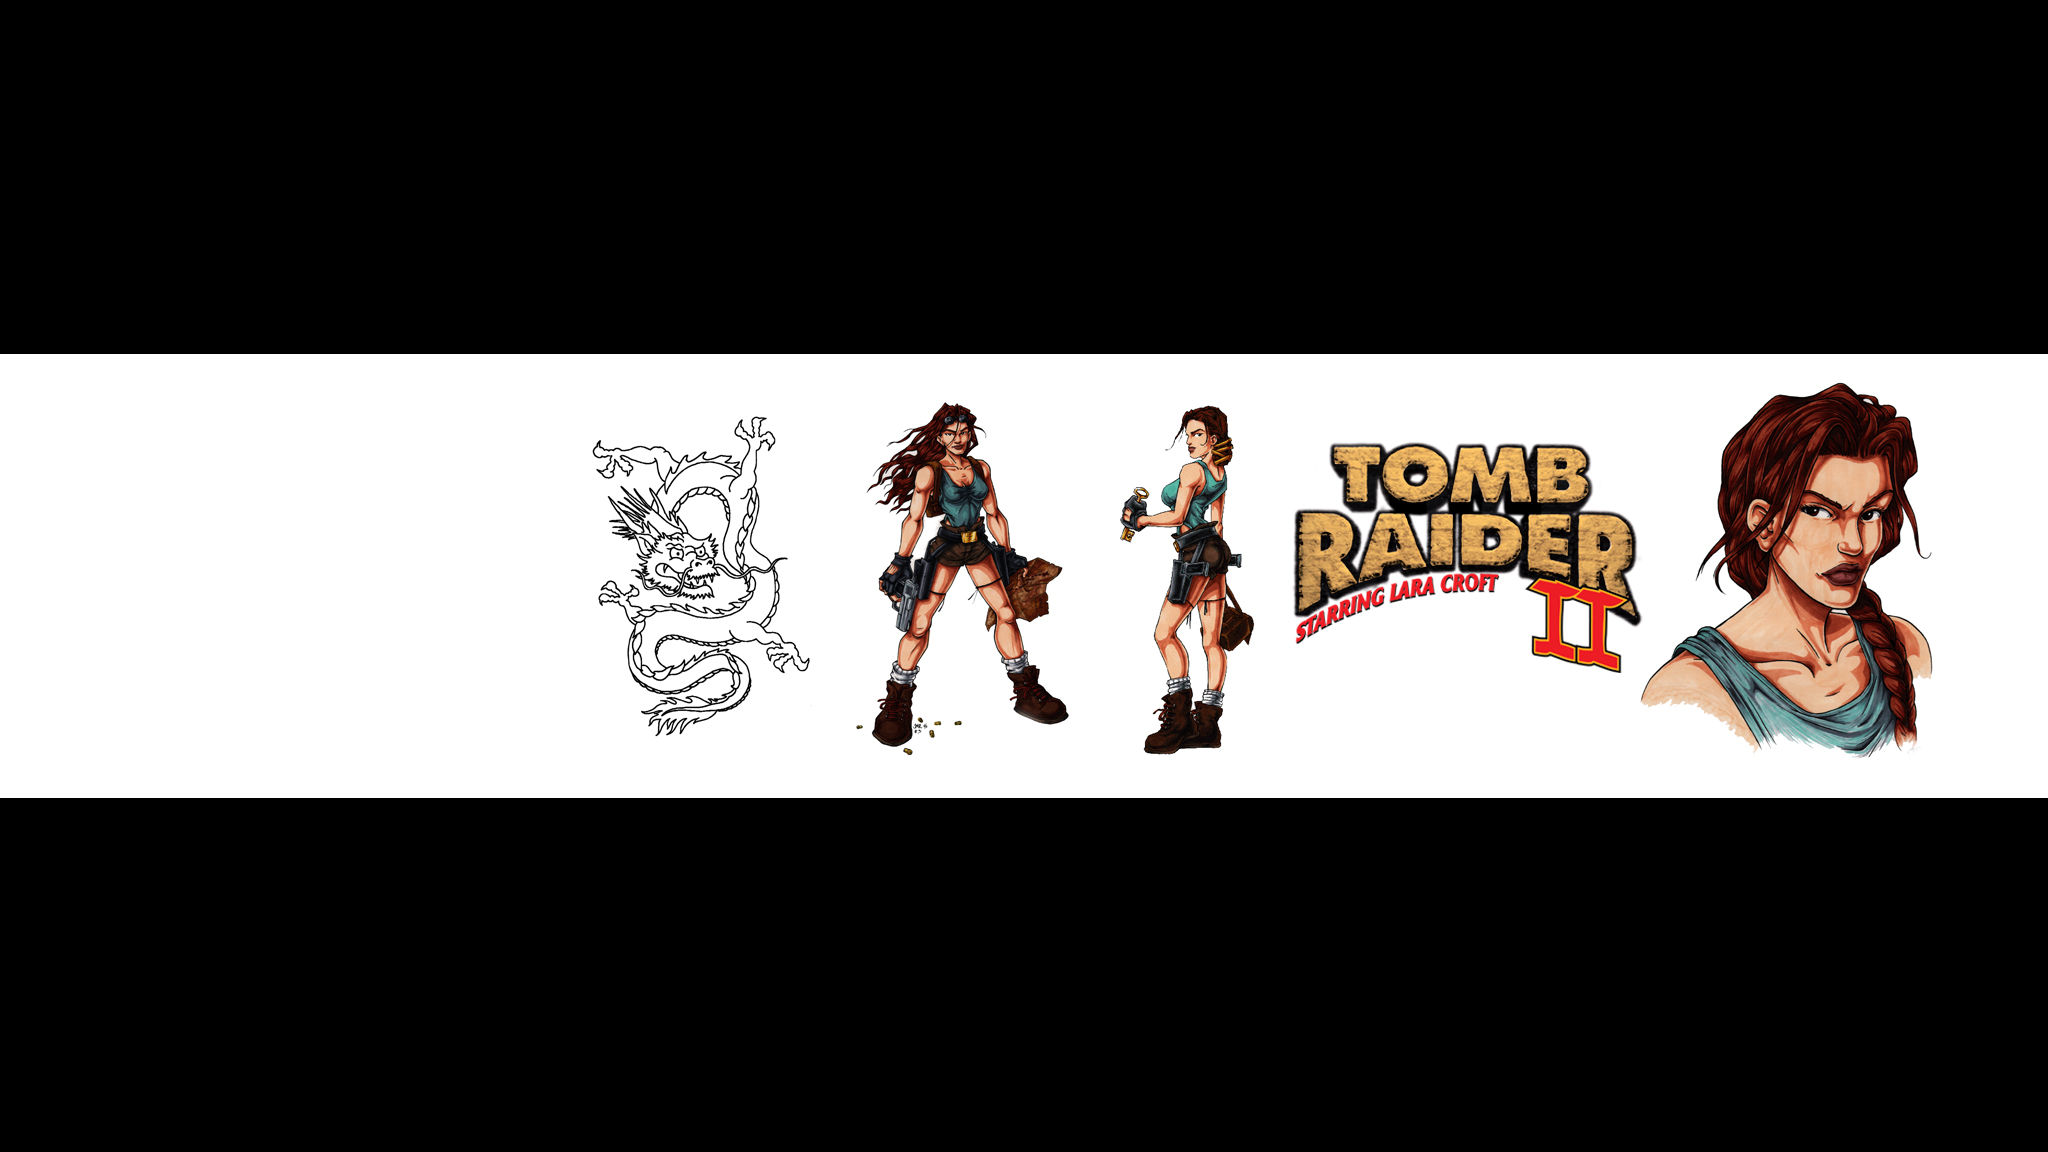 Tomb Raider II YouTube Banner Concept Art.jpg